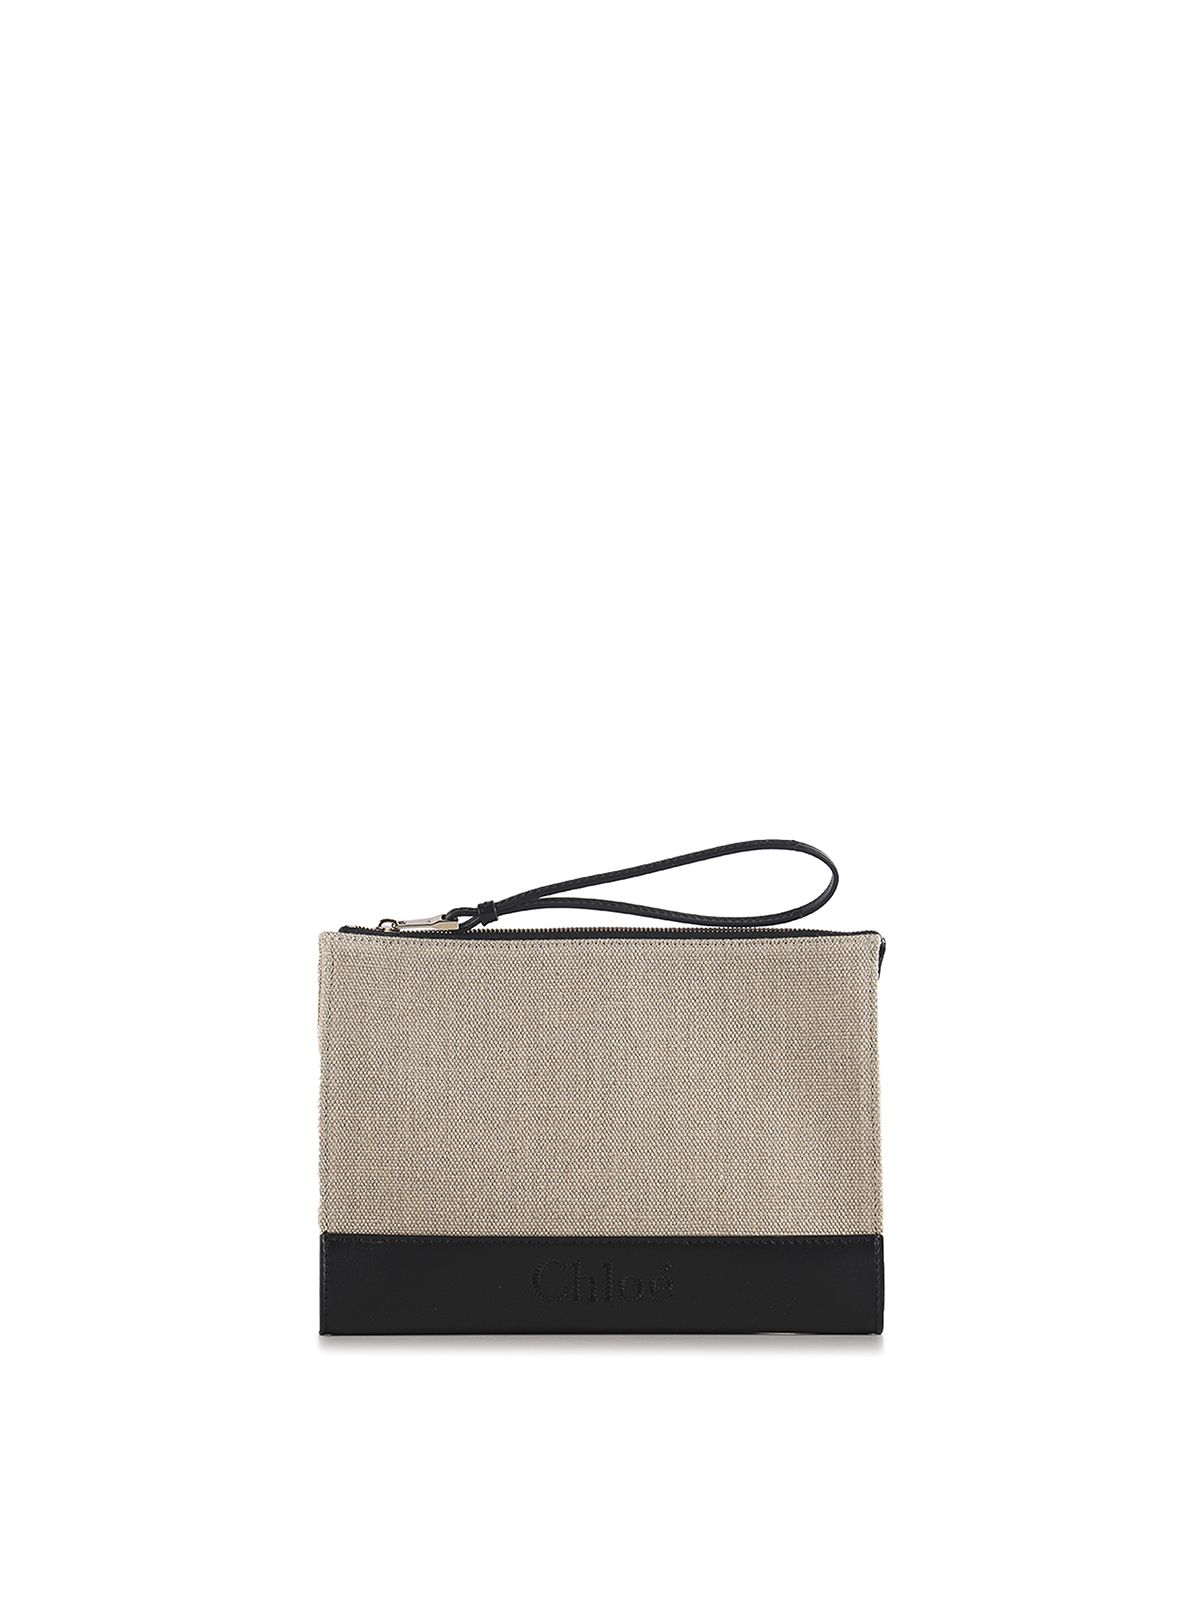 Chloé Pebble Leather Shoulder Bags | Mercari